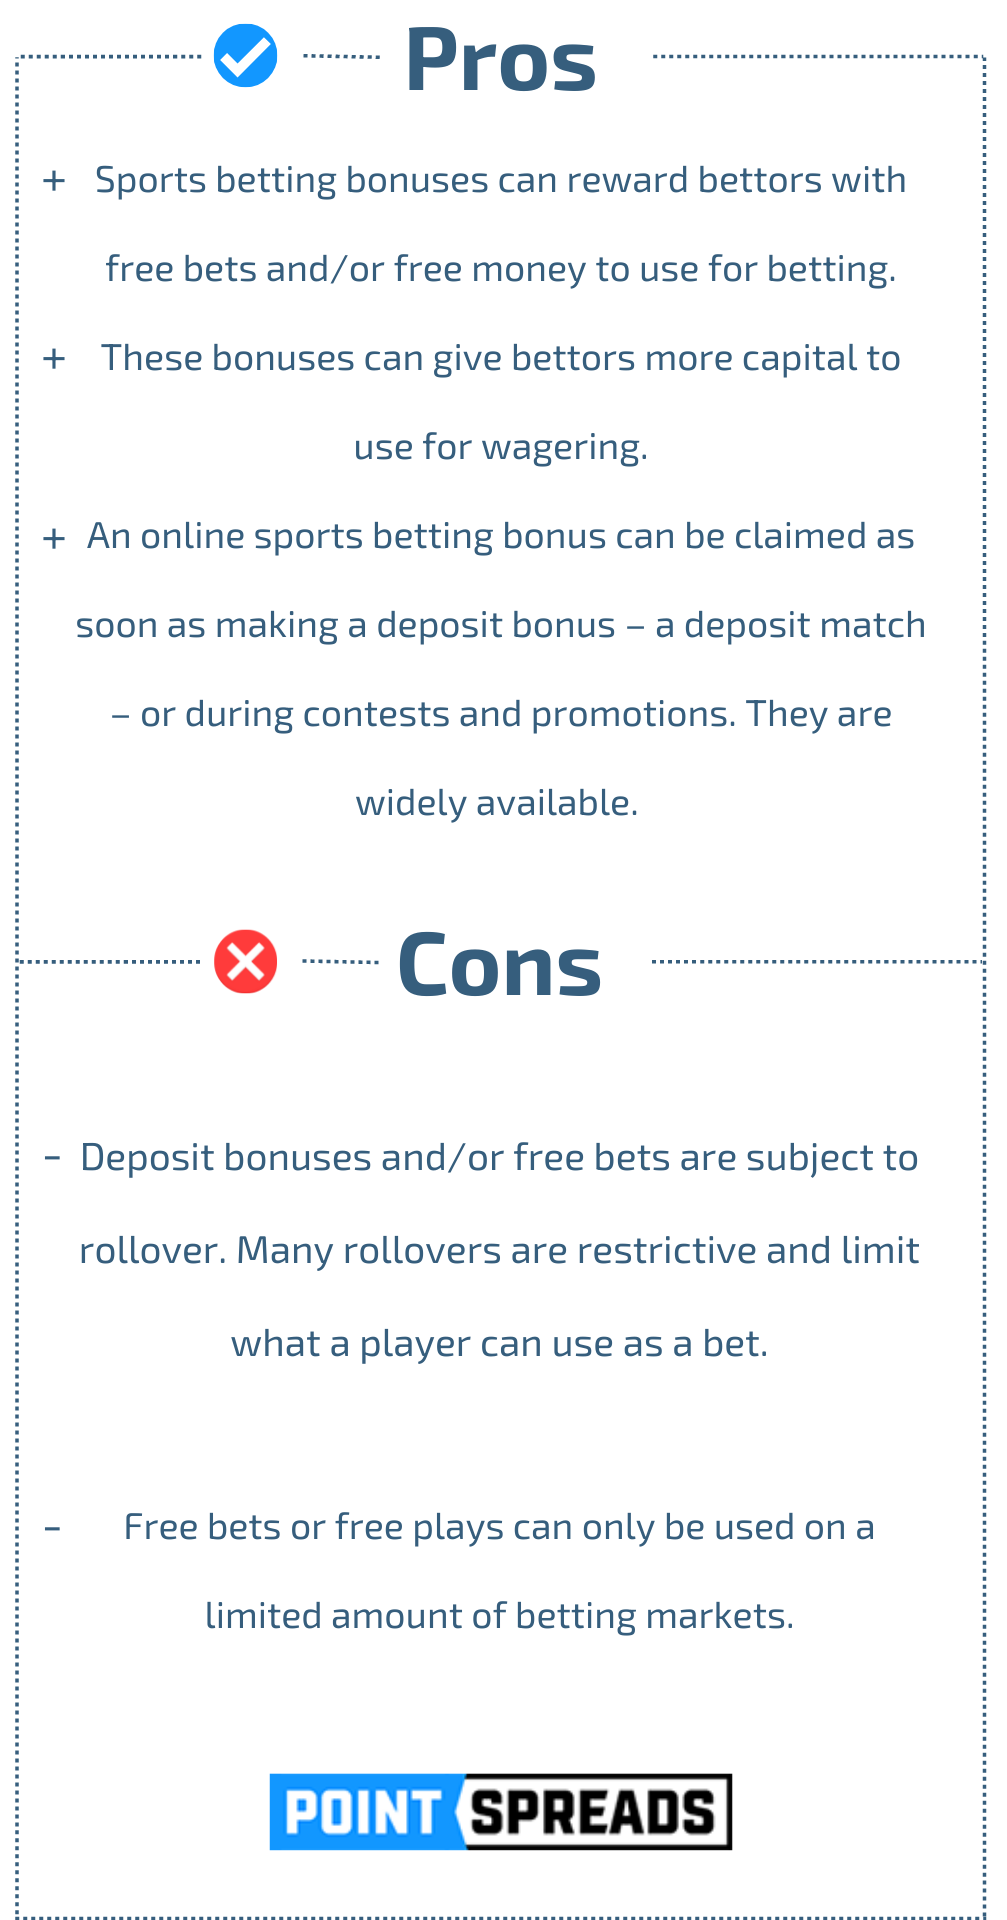 How sports betting bonuses work?